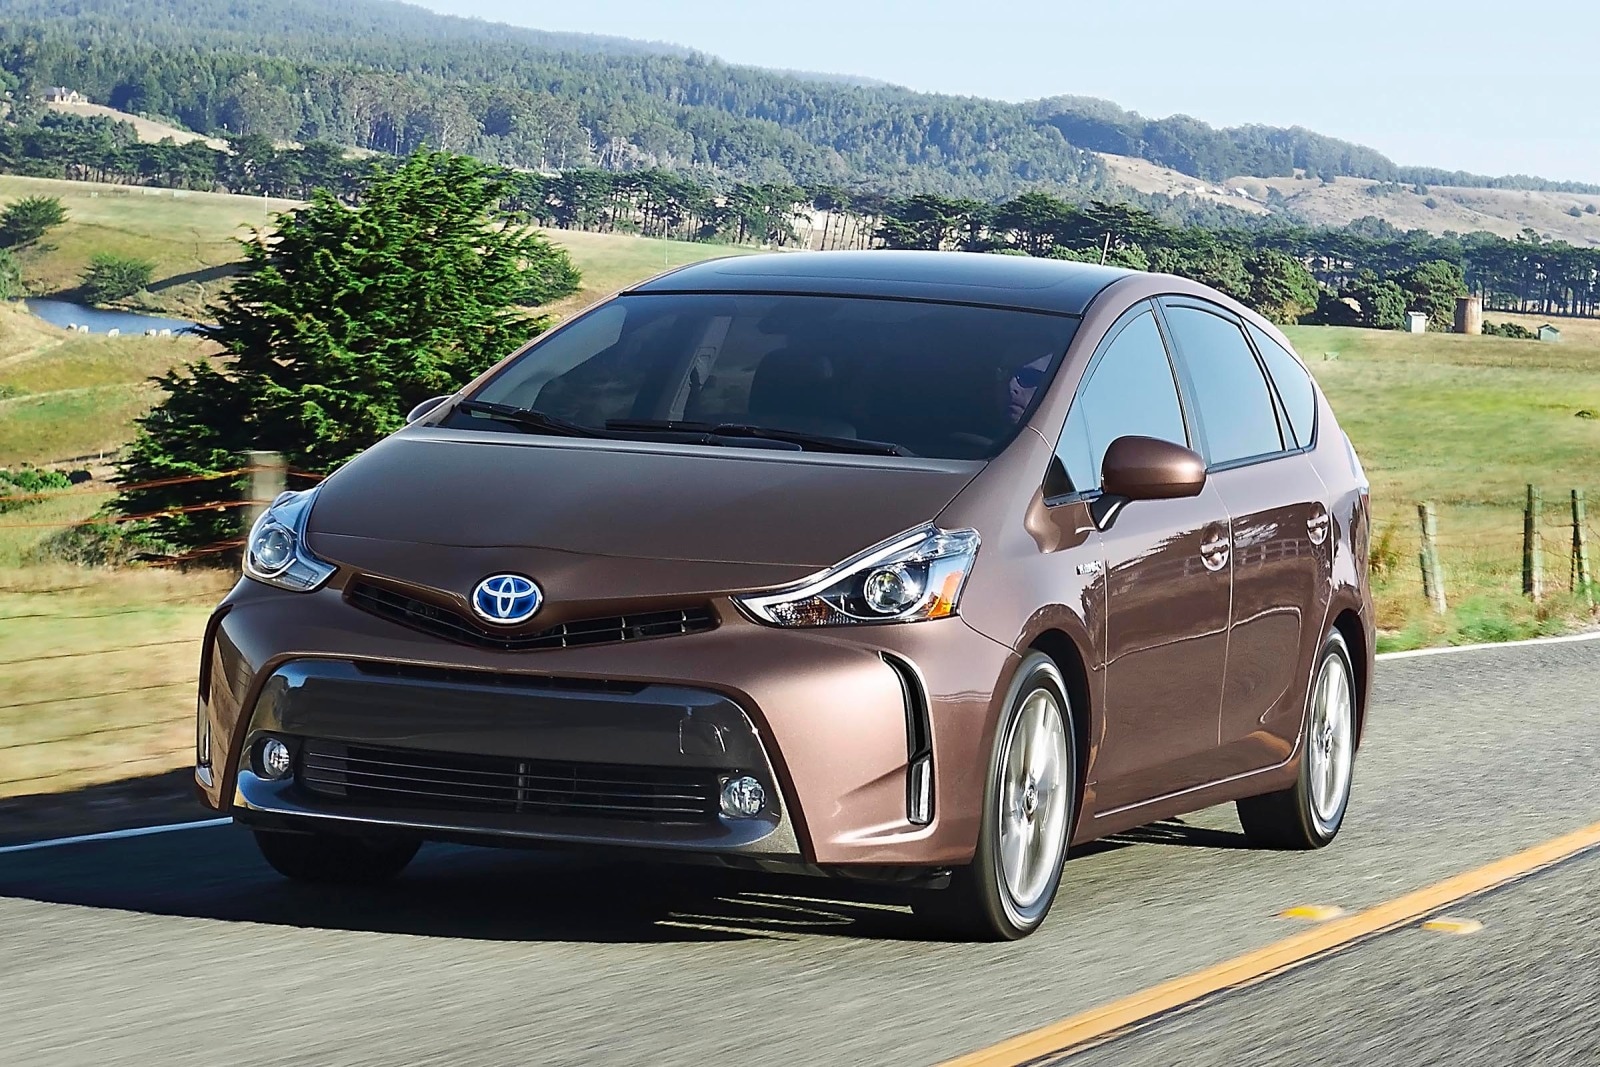 2015 Toyota Prius v Review & Ratings | Edmunds